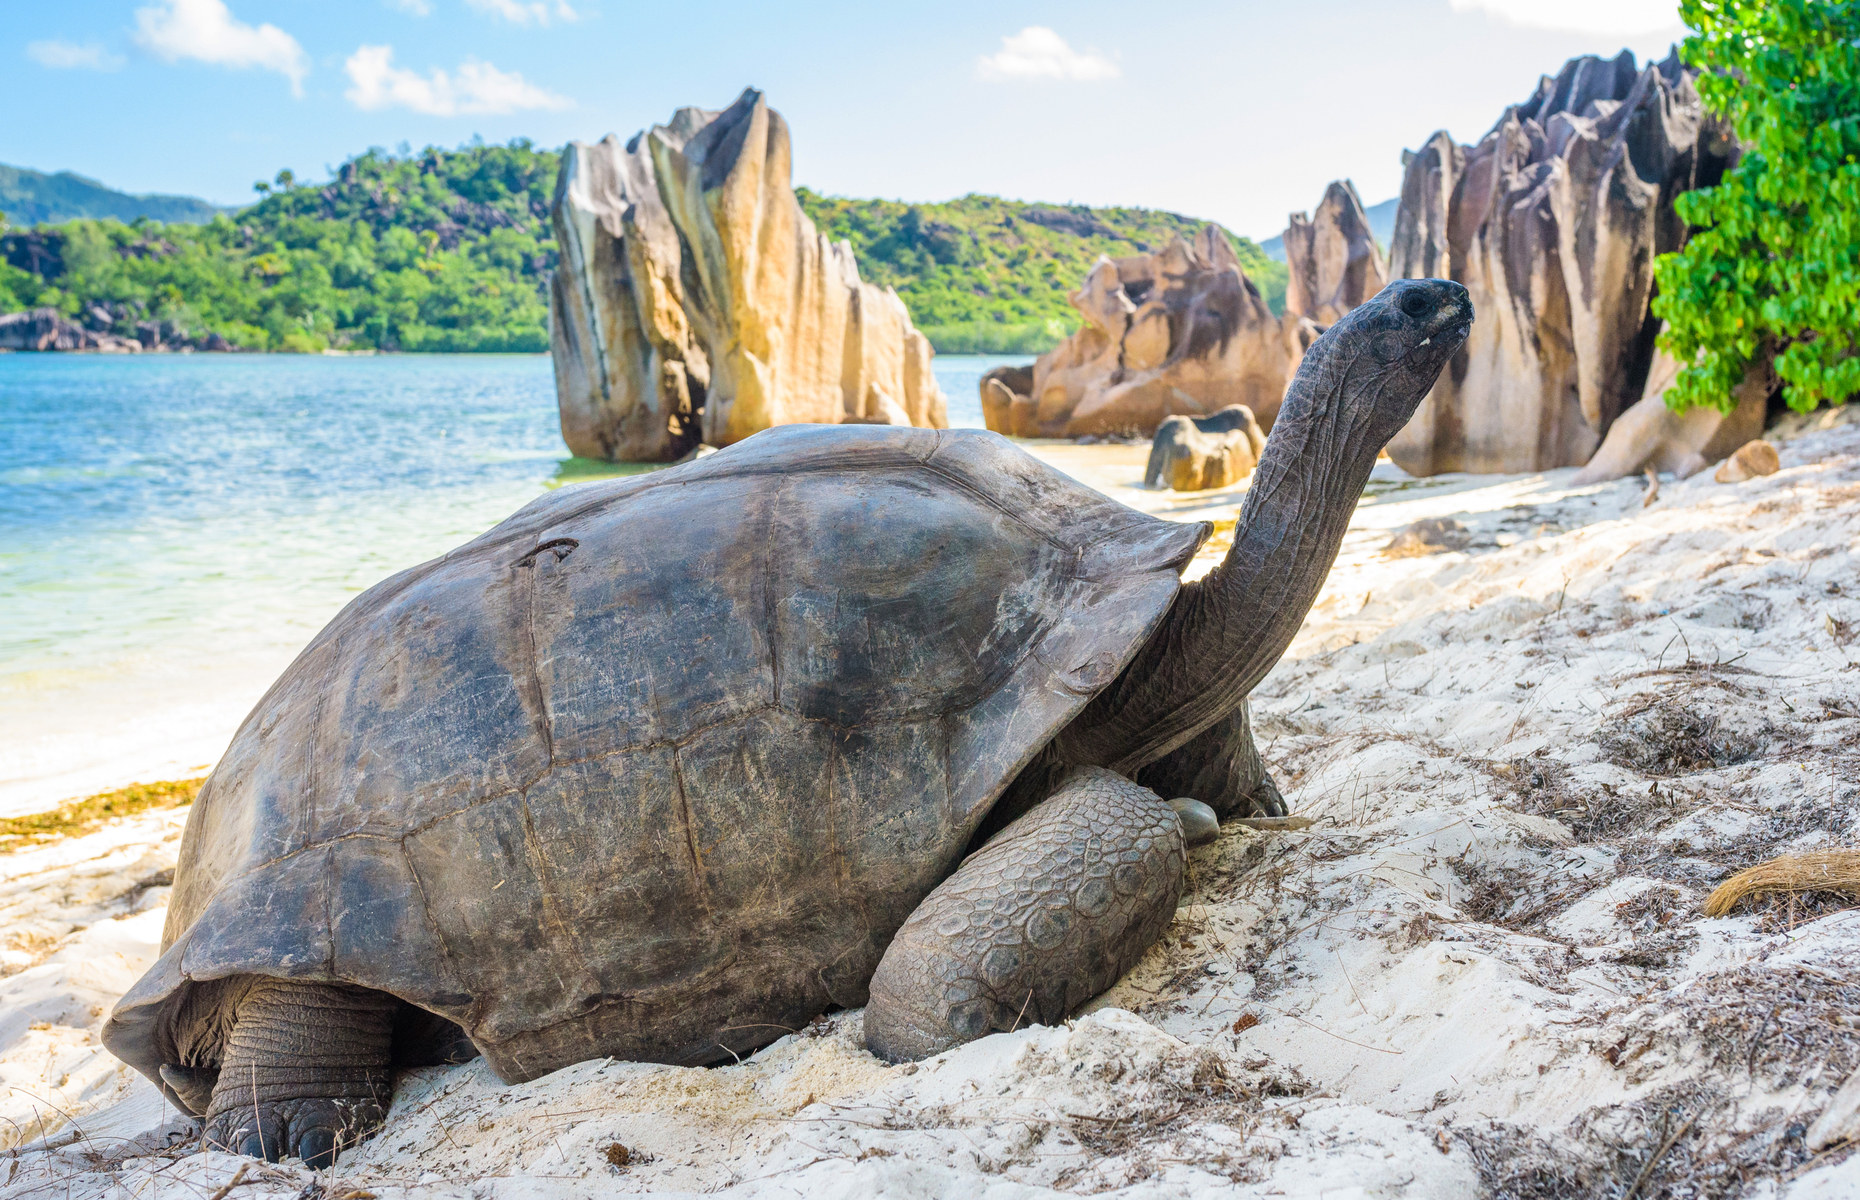 Giant tortoise on a beach in Seychelles (Image: Jan Bures/Shutterstock)